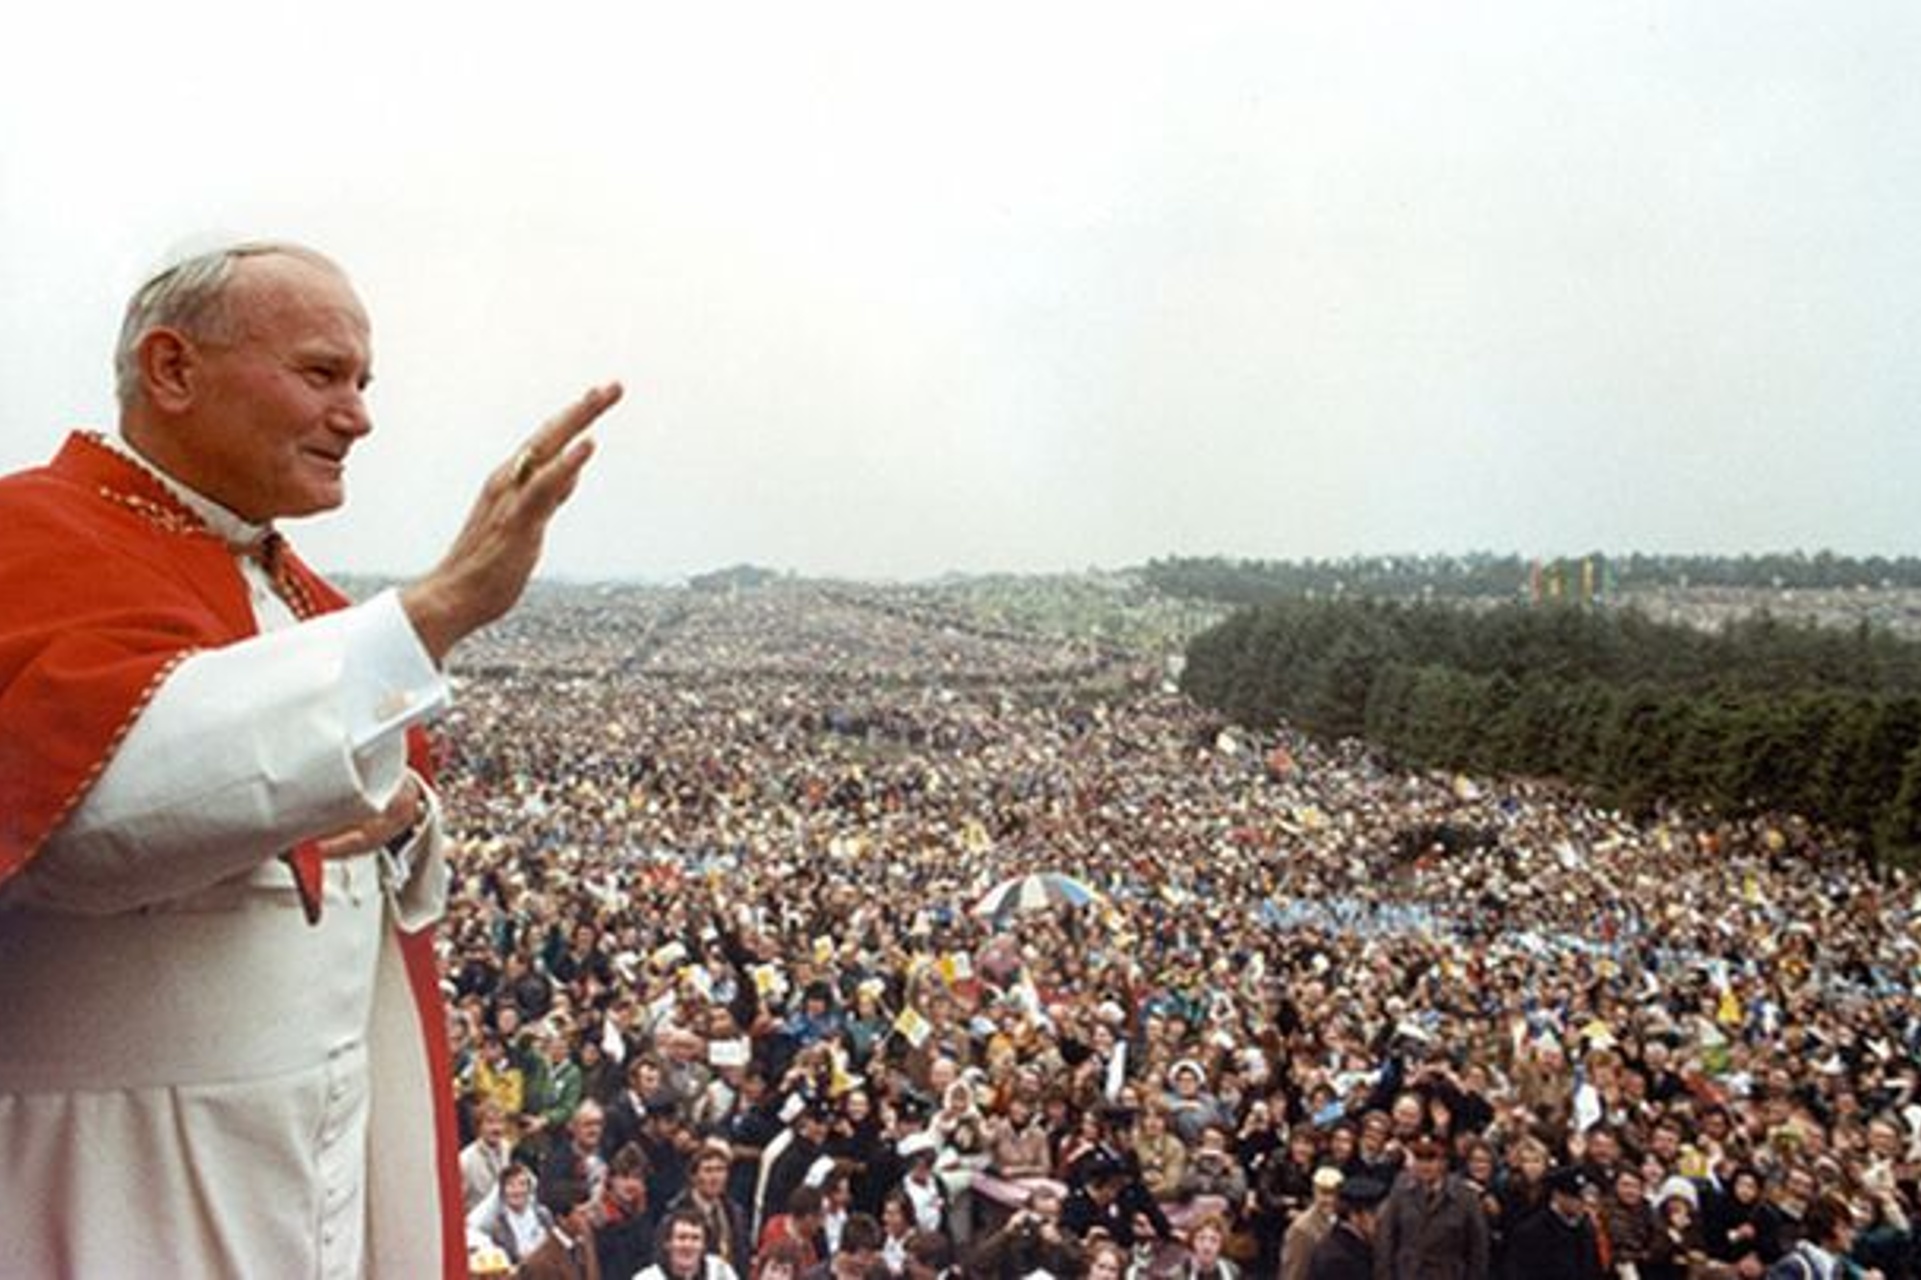 100th anniversary of the birth of St John Paul II